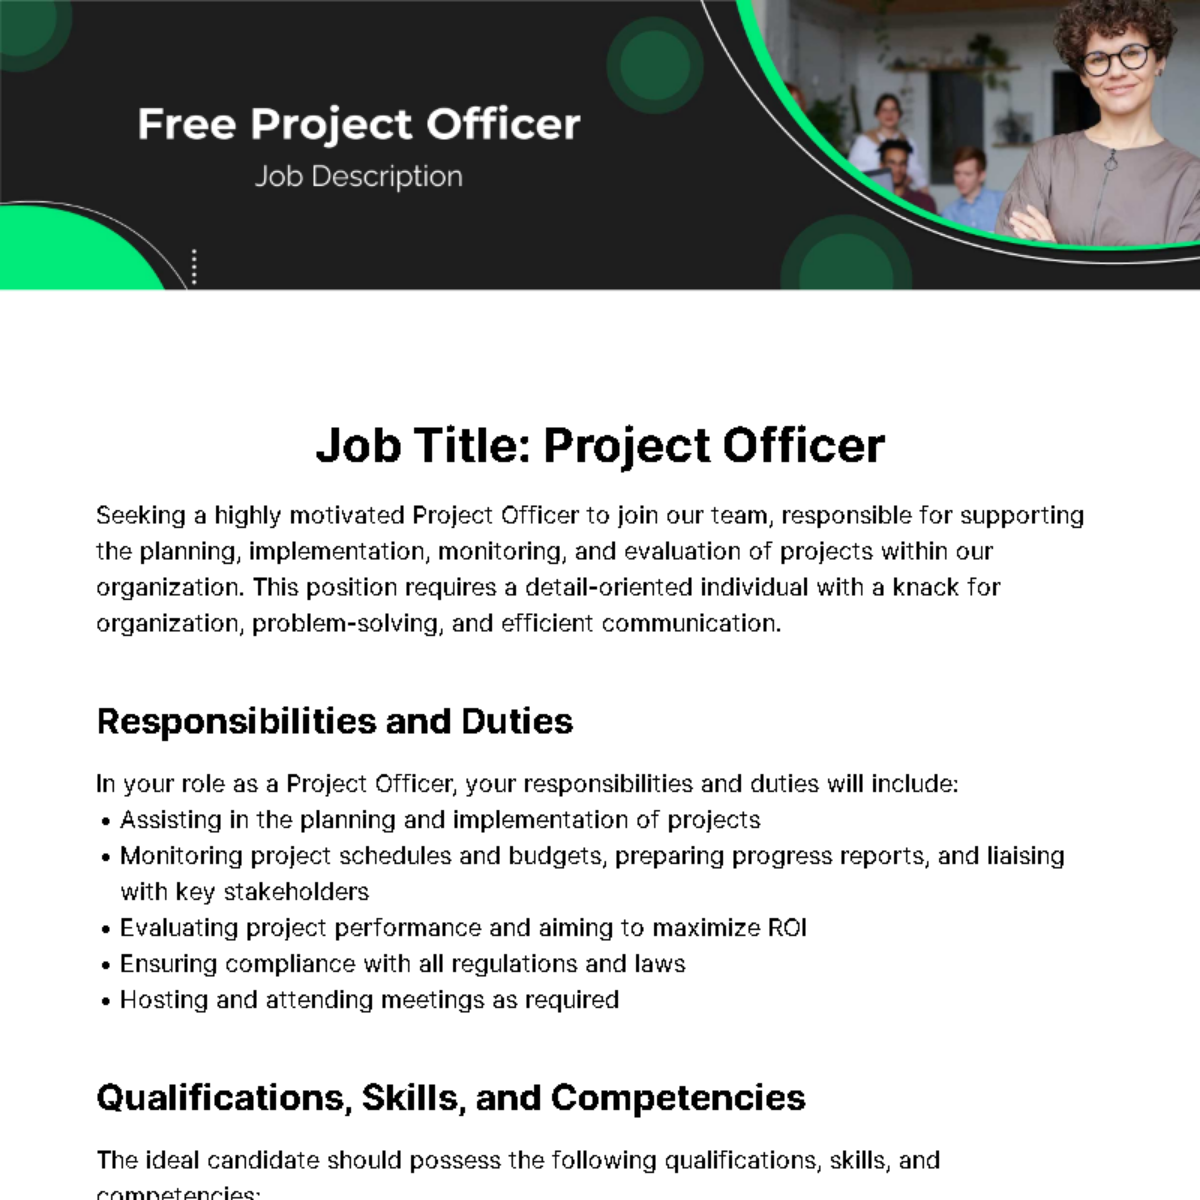 Free Project Officer Job Description Template